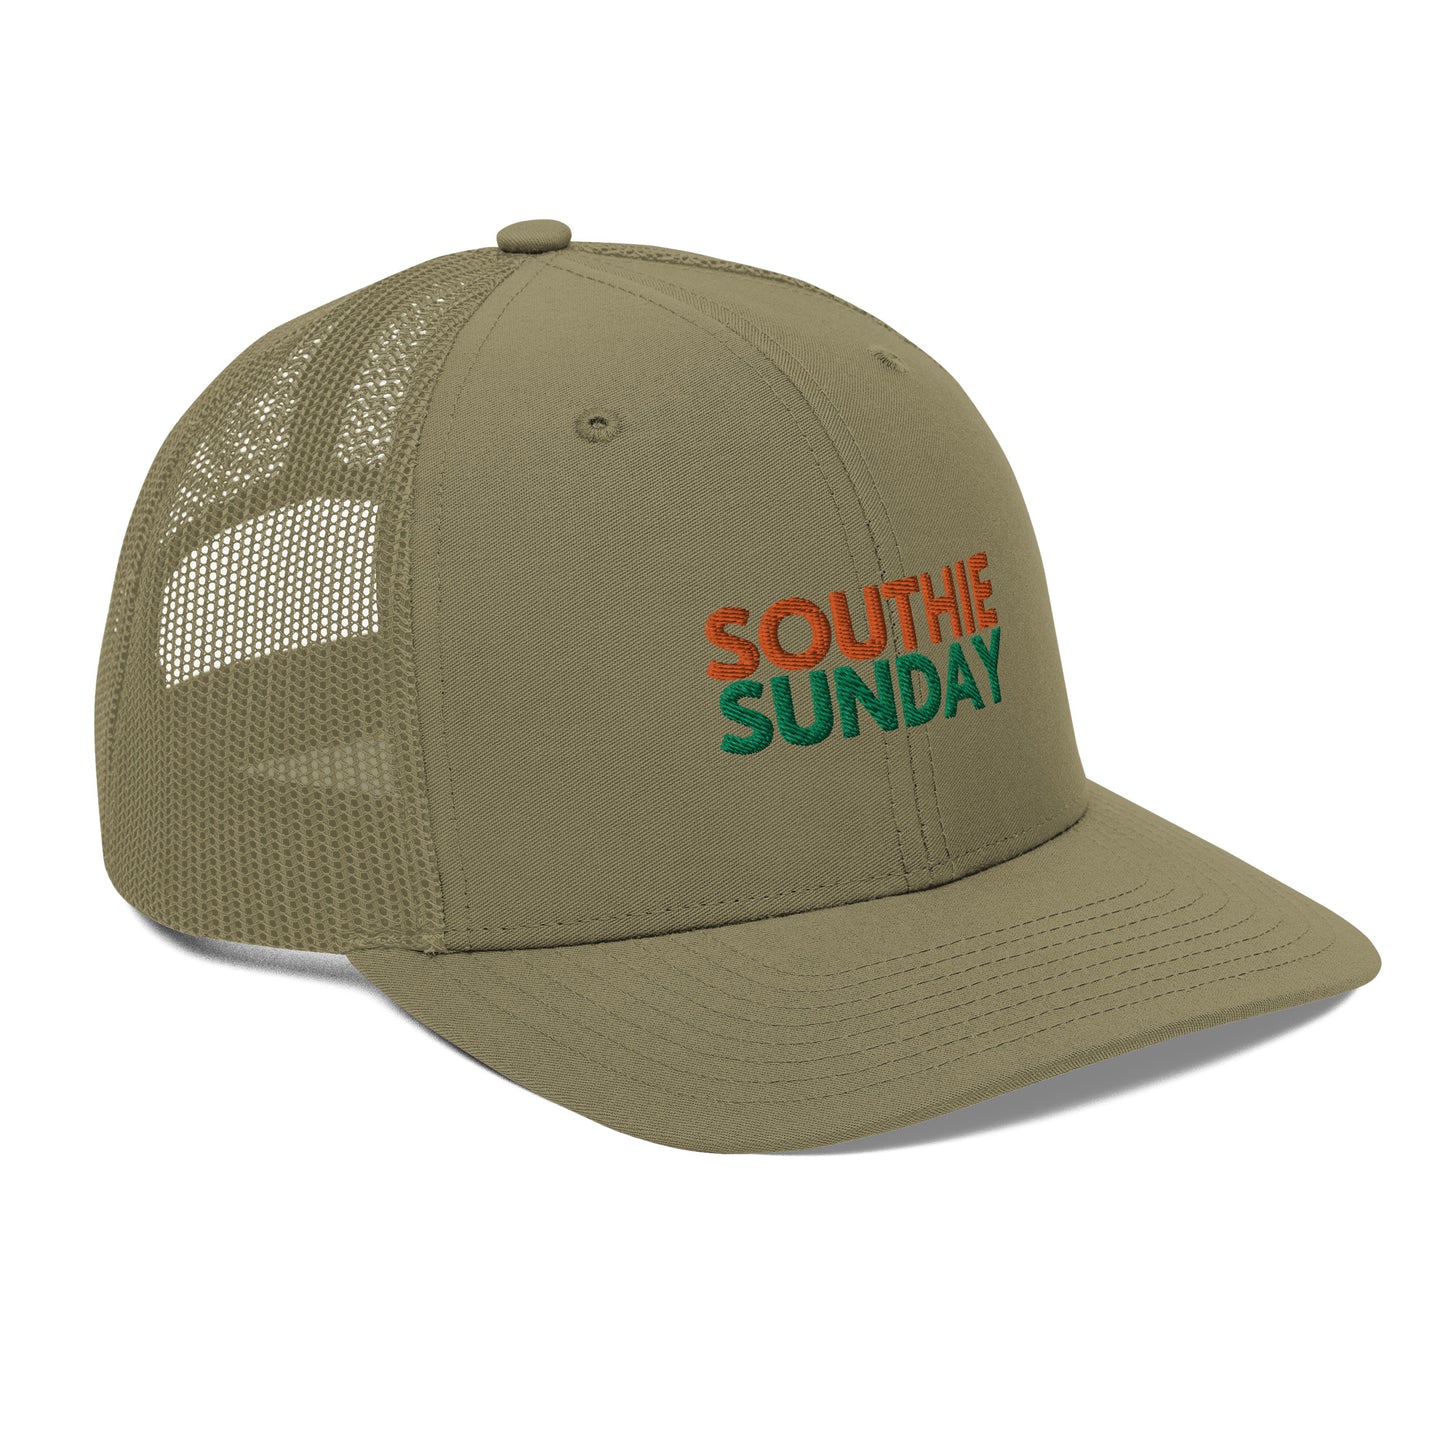 Southie Sunday Trucker Hat